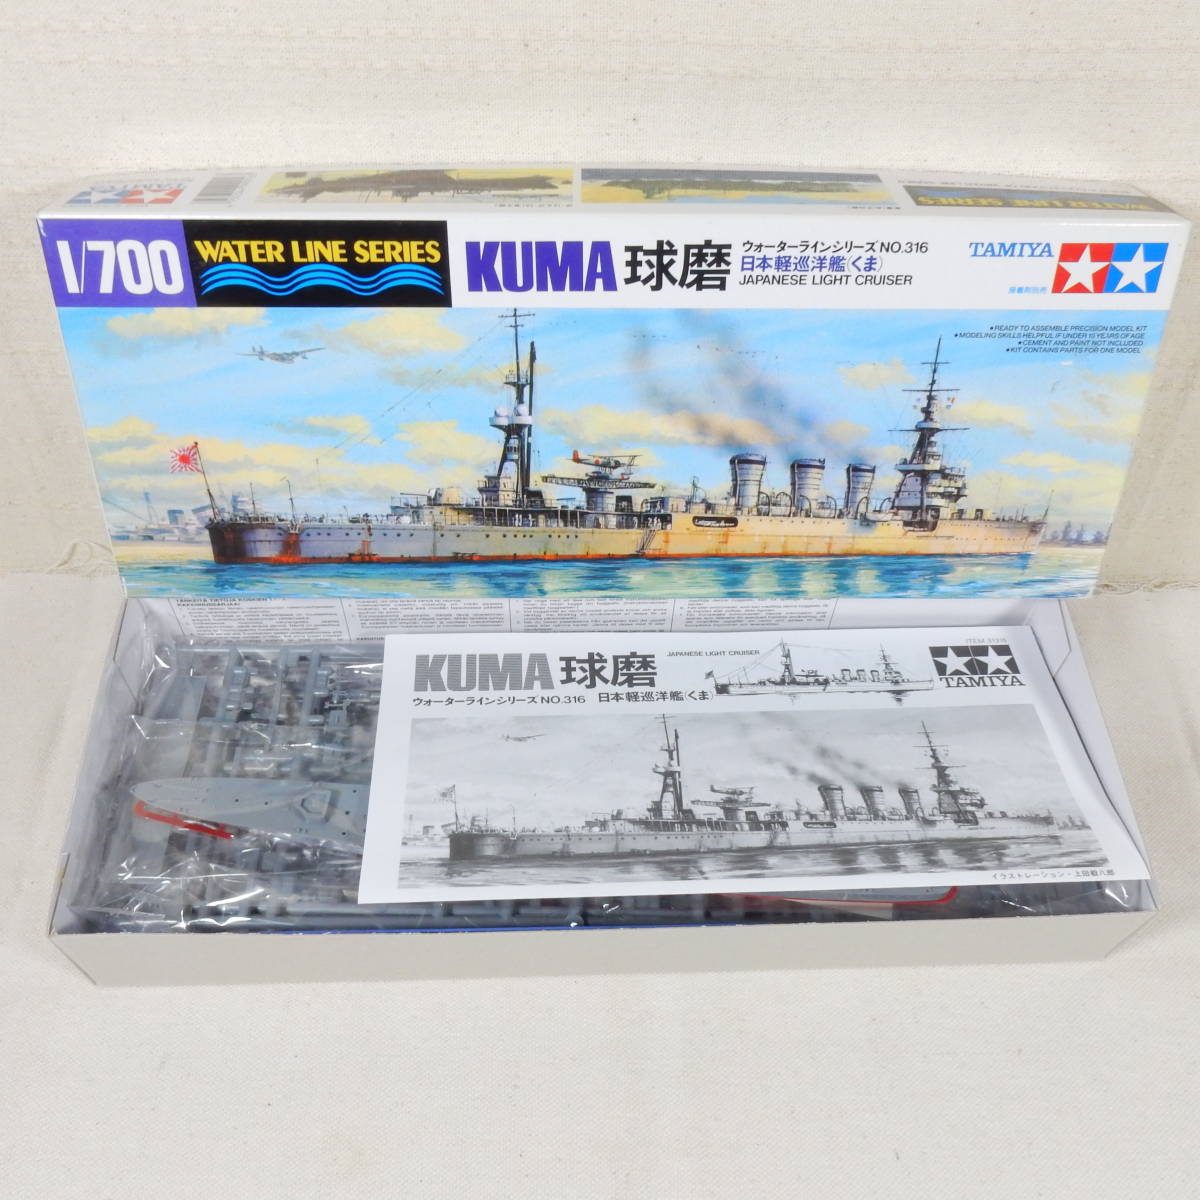 (17B46) 日本軽巡洋艦 球磨(くま) タミヤ 1/700 ウォーターラインシリーズ NO.316 内袋未開封 未組立て_画像1